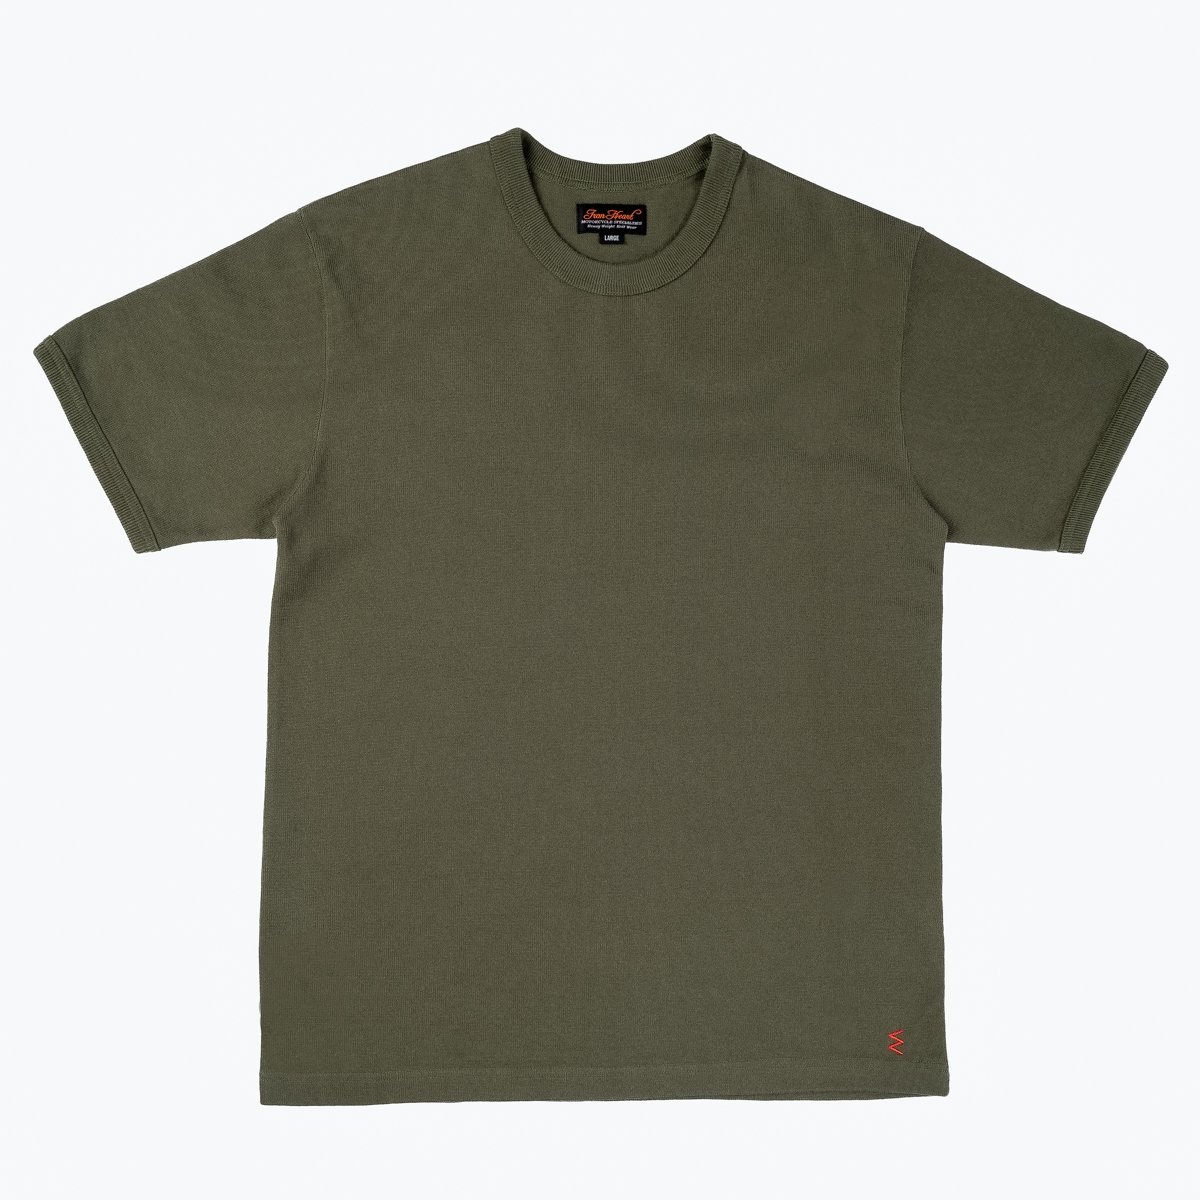 IHT-1600-OLV 11oz Cotton Knit Crew Neck T-Shirt - Olive - 1